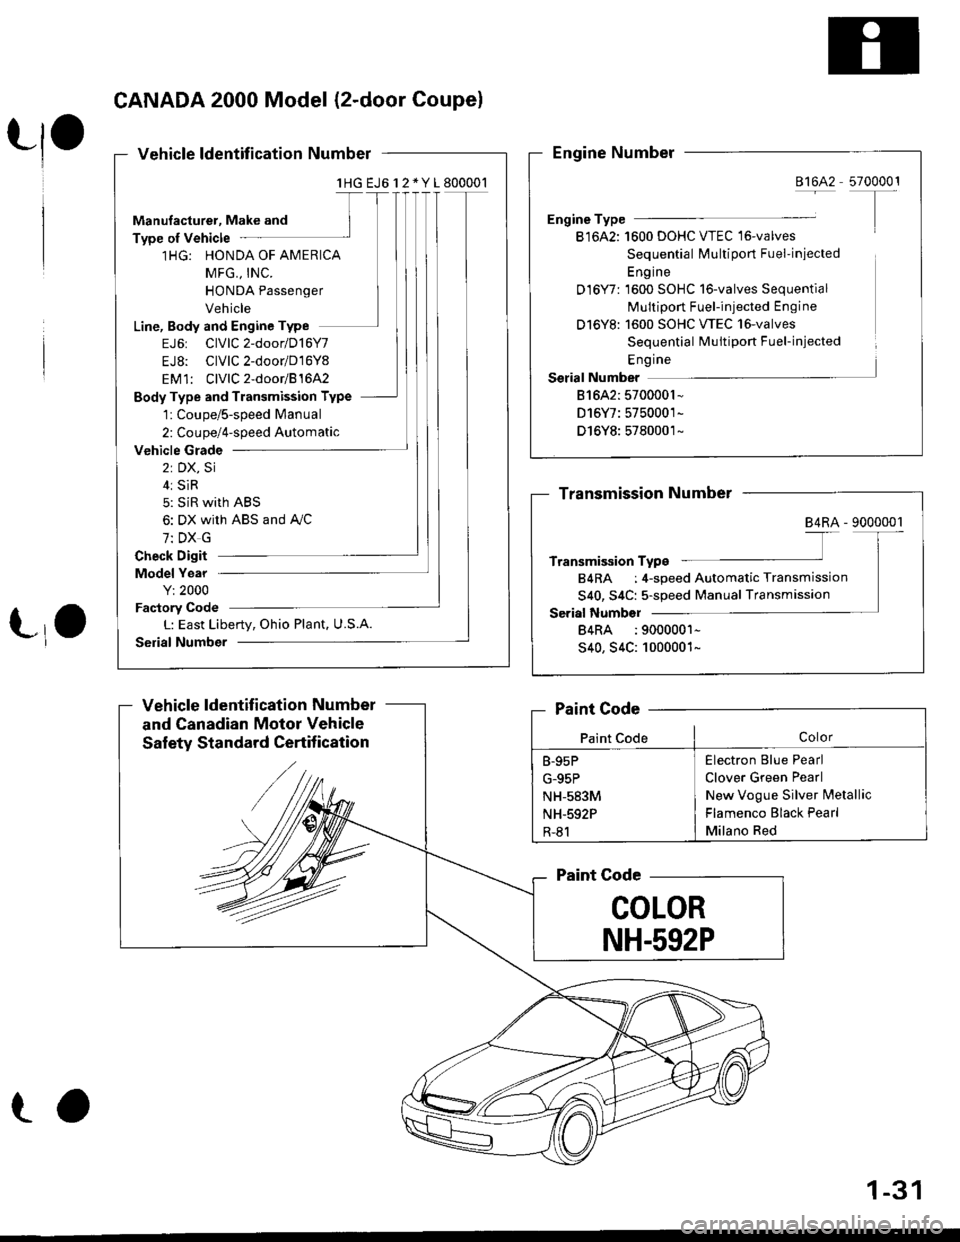 HONDA CIVIC 1999 6.G Workshop Manual CANADA 2000 Model (2-door Coupel
Vehicle ldentification Number
lHG EJ6l 2 * Y 1800001
Manufacturer, Make and
Type of Vehicle
1HG: HONDA OF AMERICA
MFG,, INC.
HONDA Passenger
Vehicle
Line, Body and En